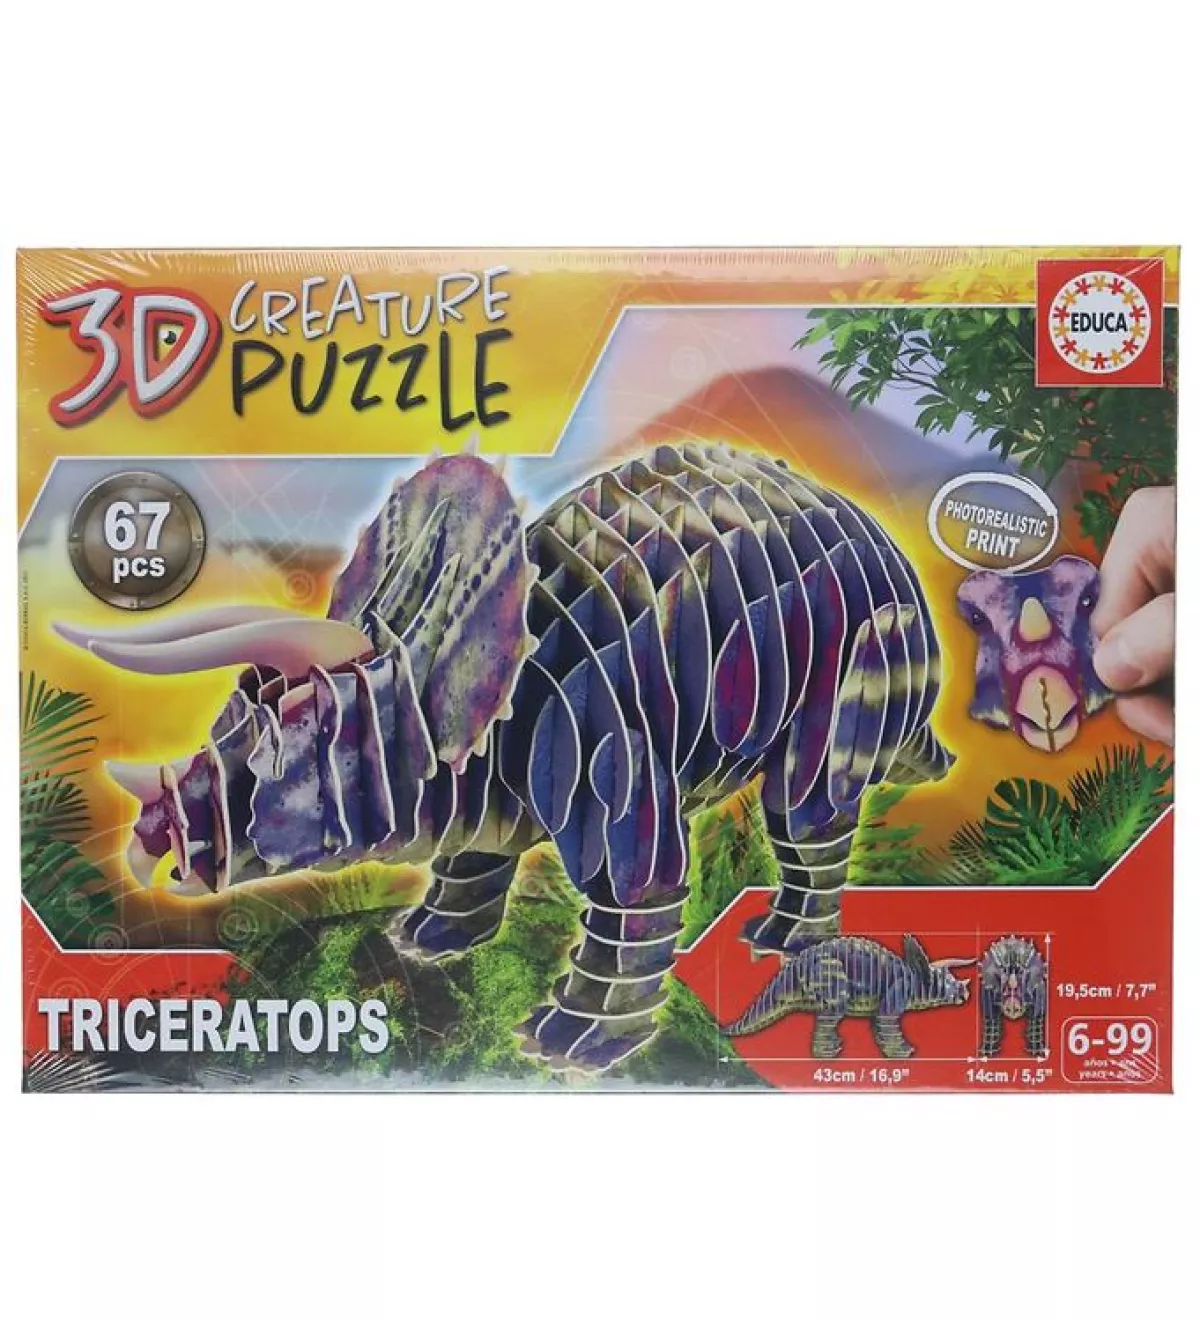 #1 - Educa 3D Creature puslespil, Triceratops